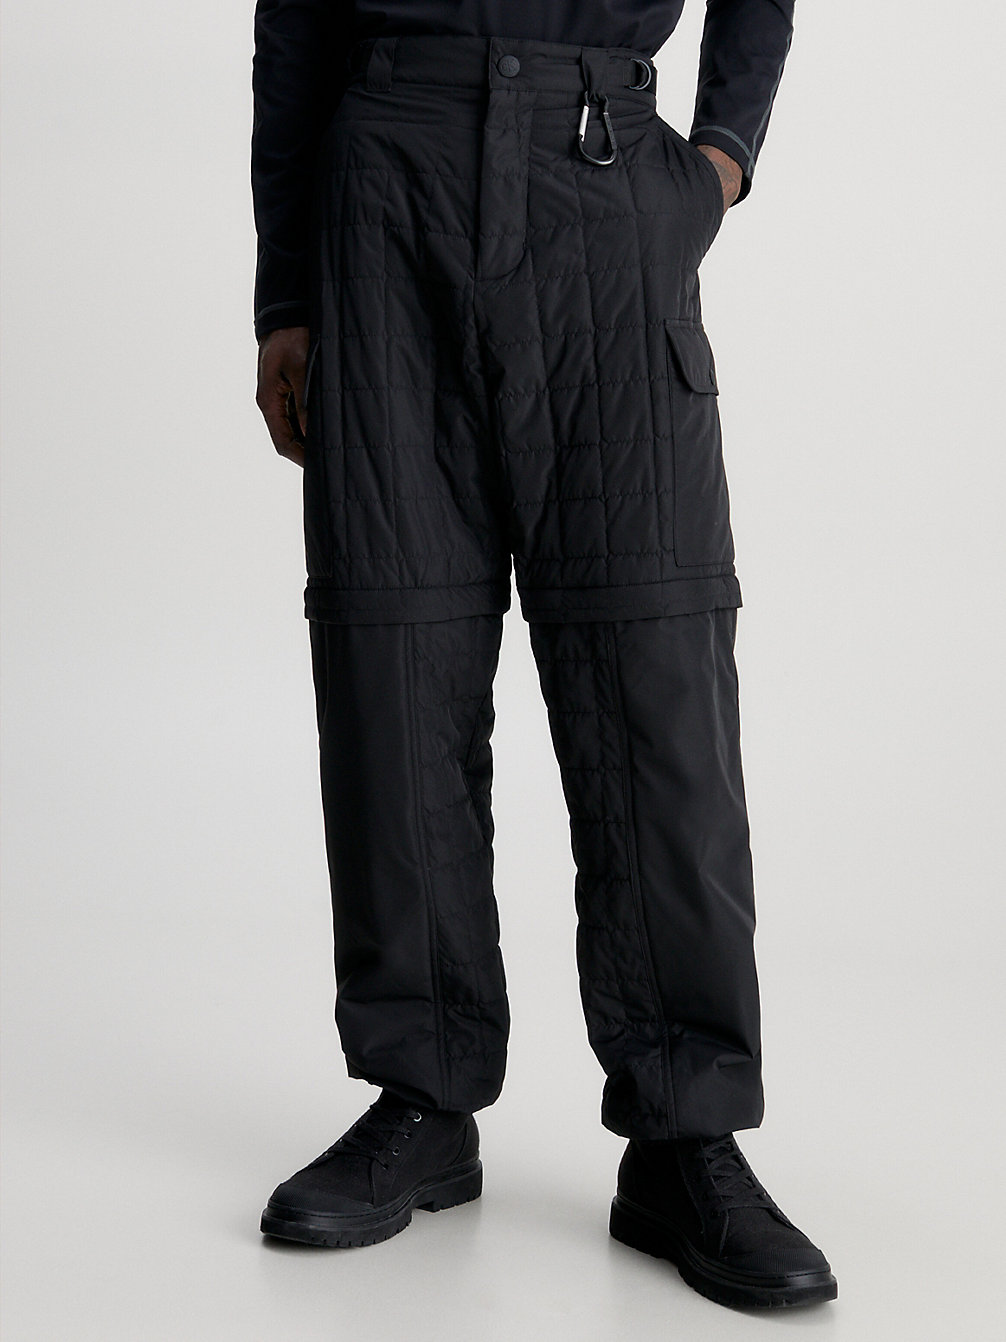 CK BLACK 2-In-1 Quilted Cargo Pants undefined men Calvin Klein